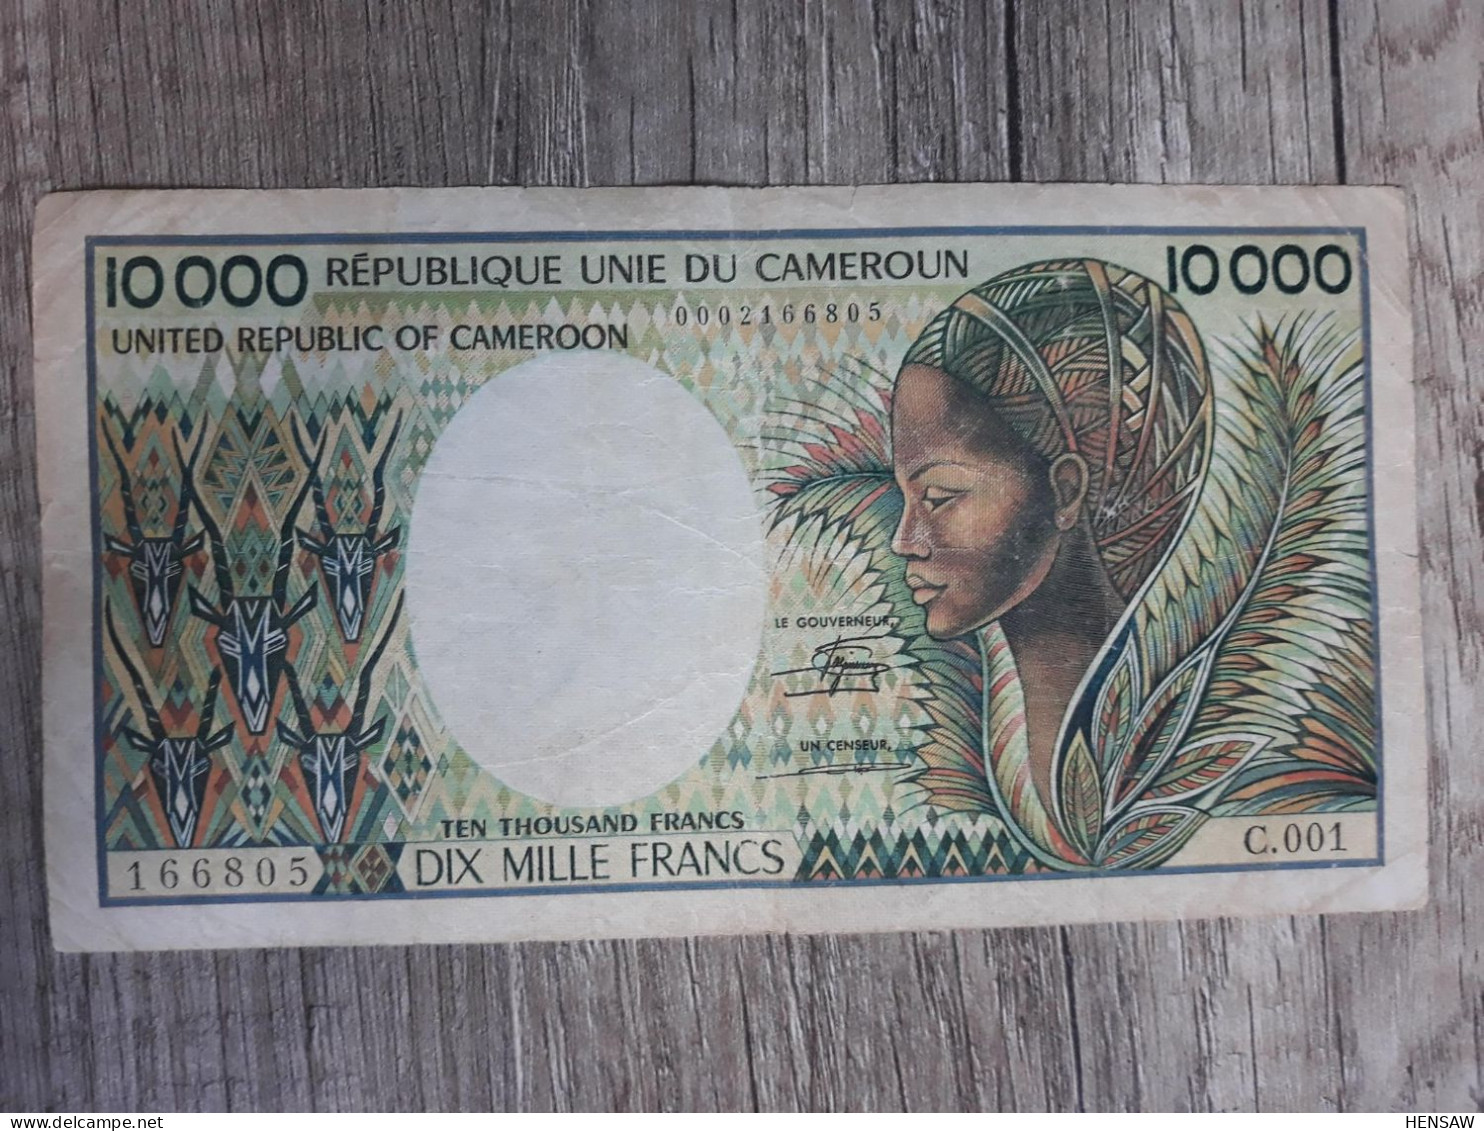 CAMEROON 10000 FRANCS 1981 ND P 20 USED USADO - Kamerun